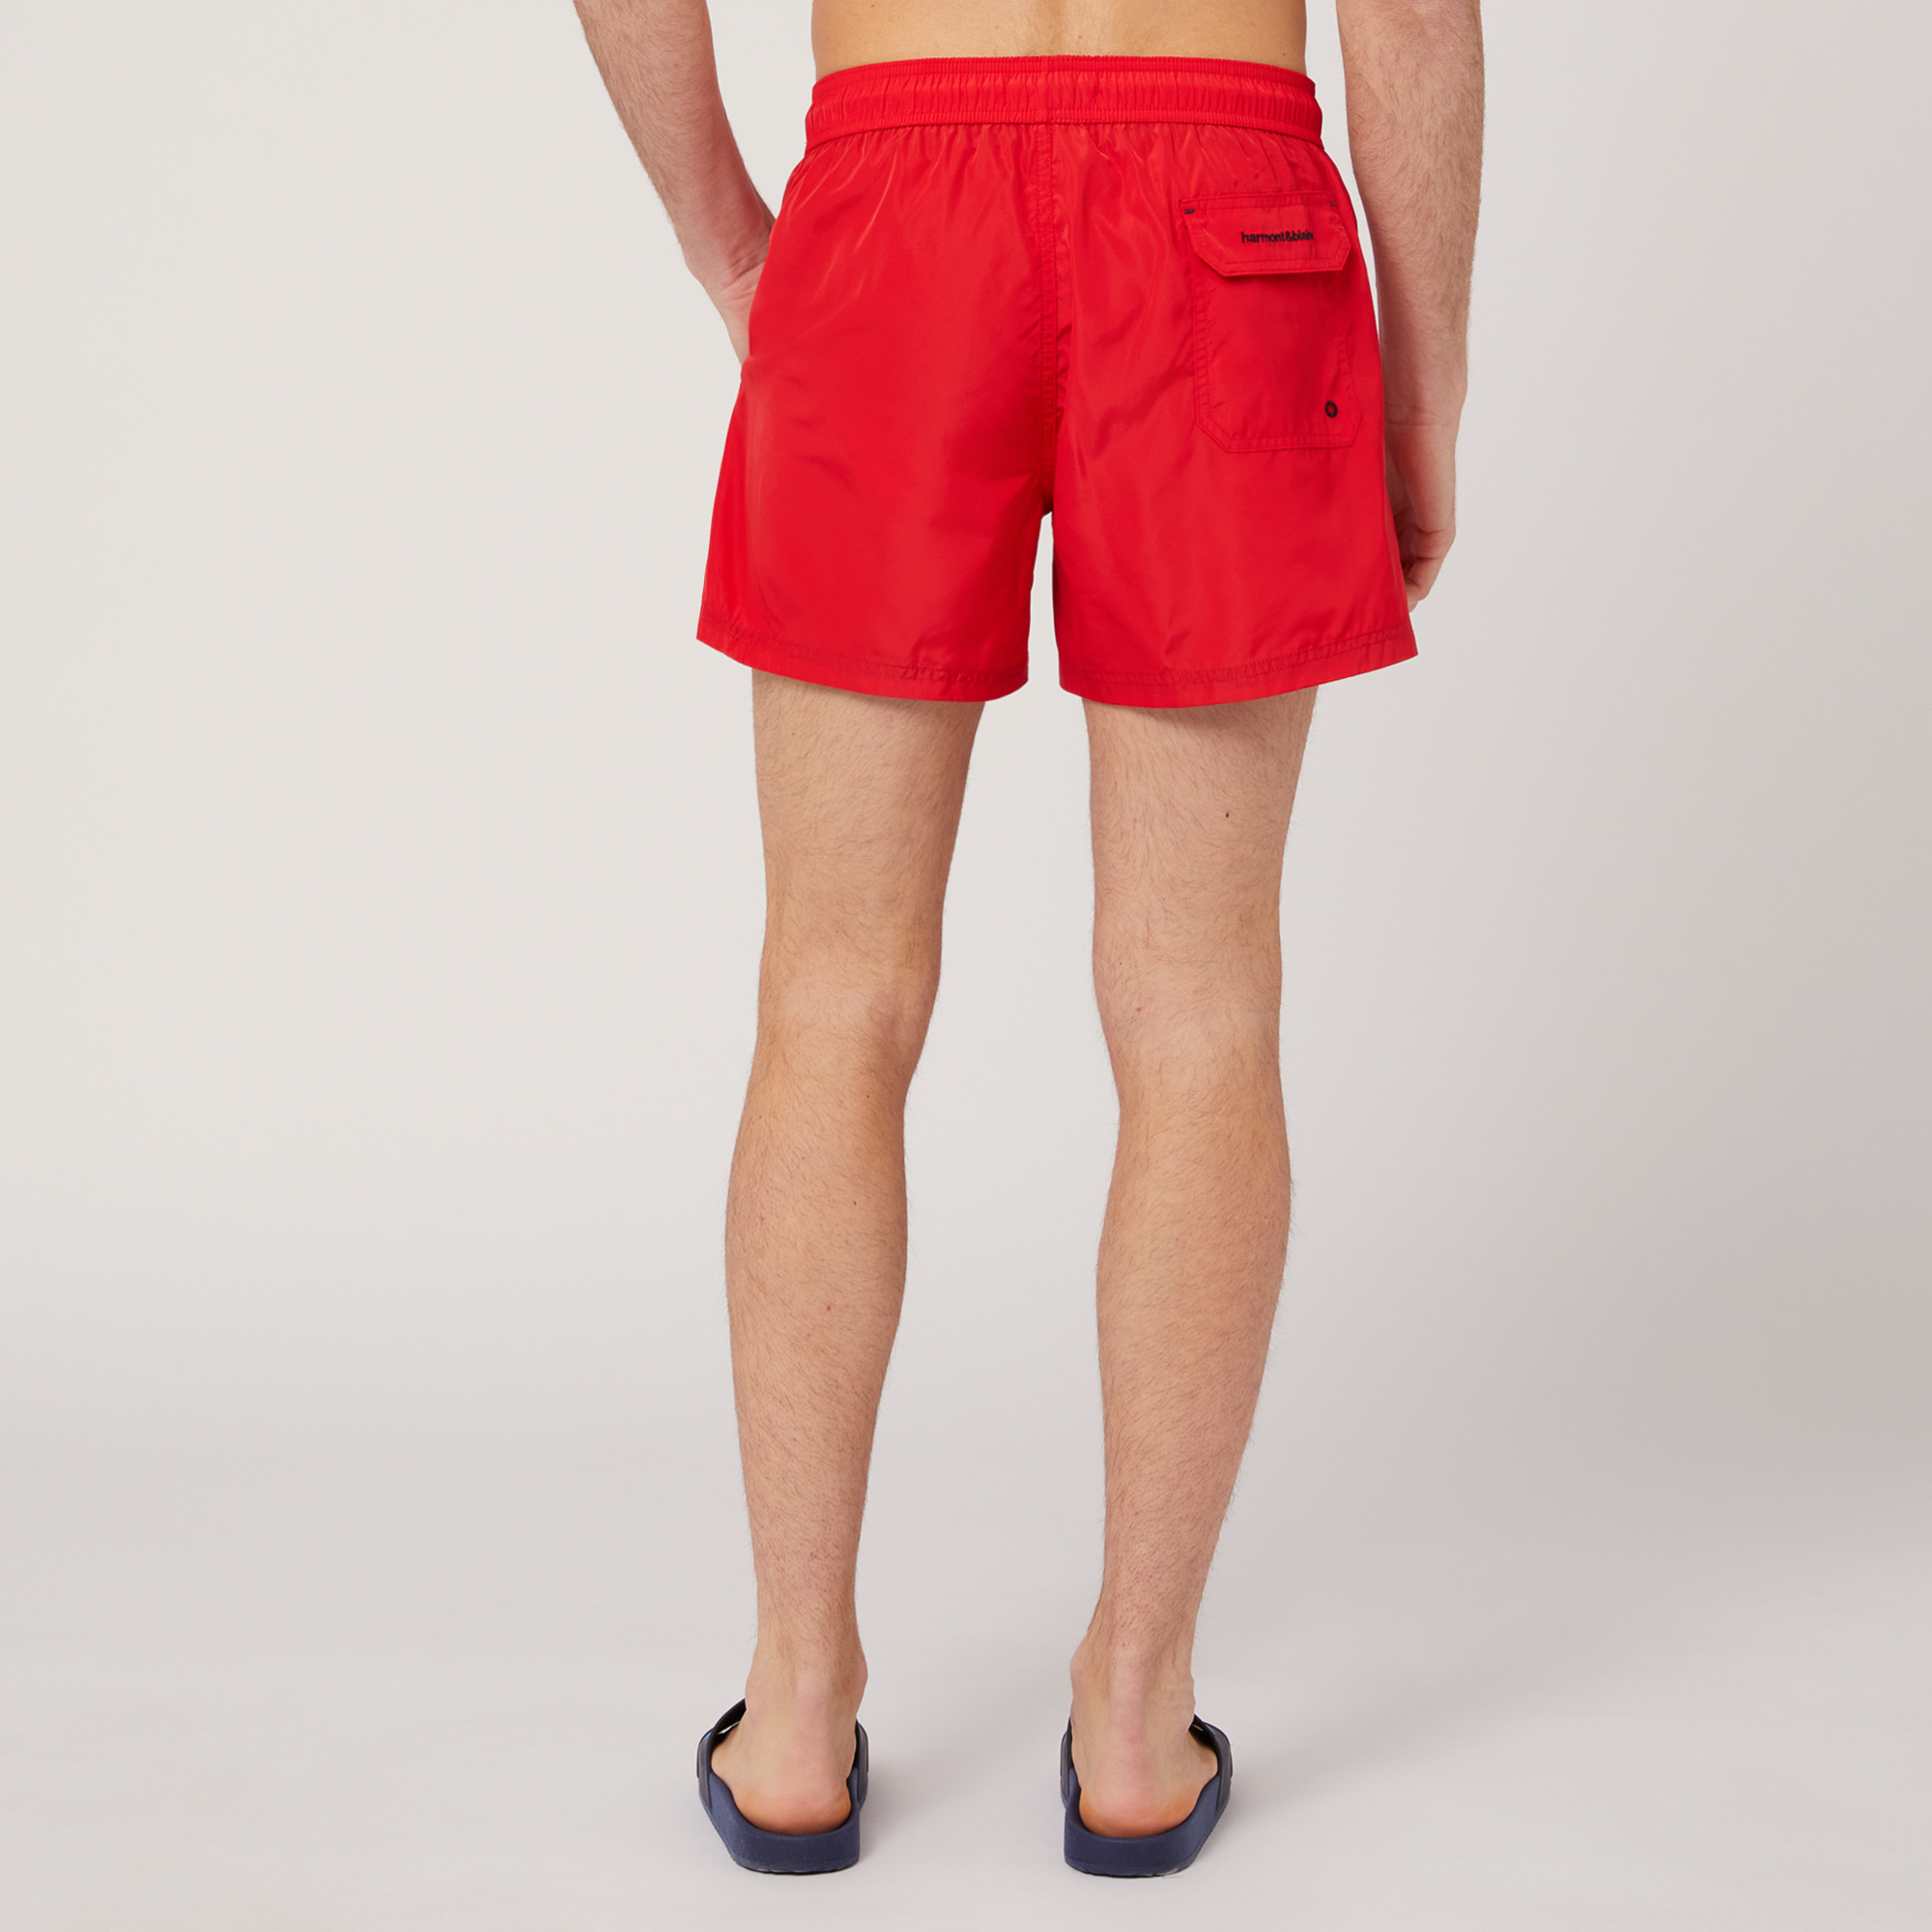 Short Swim Trunks, Red, large image number 1